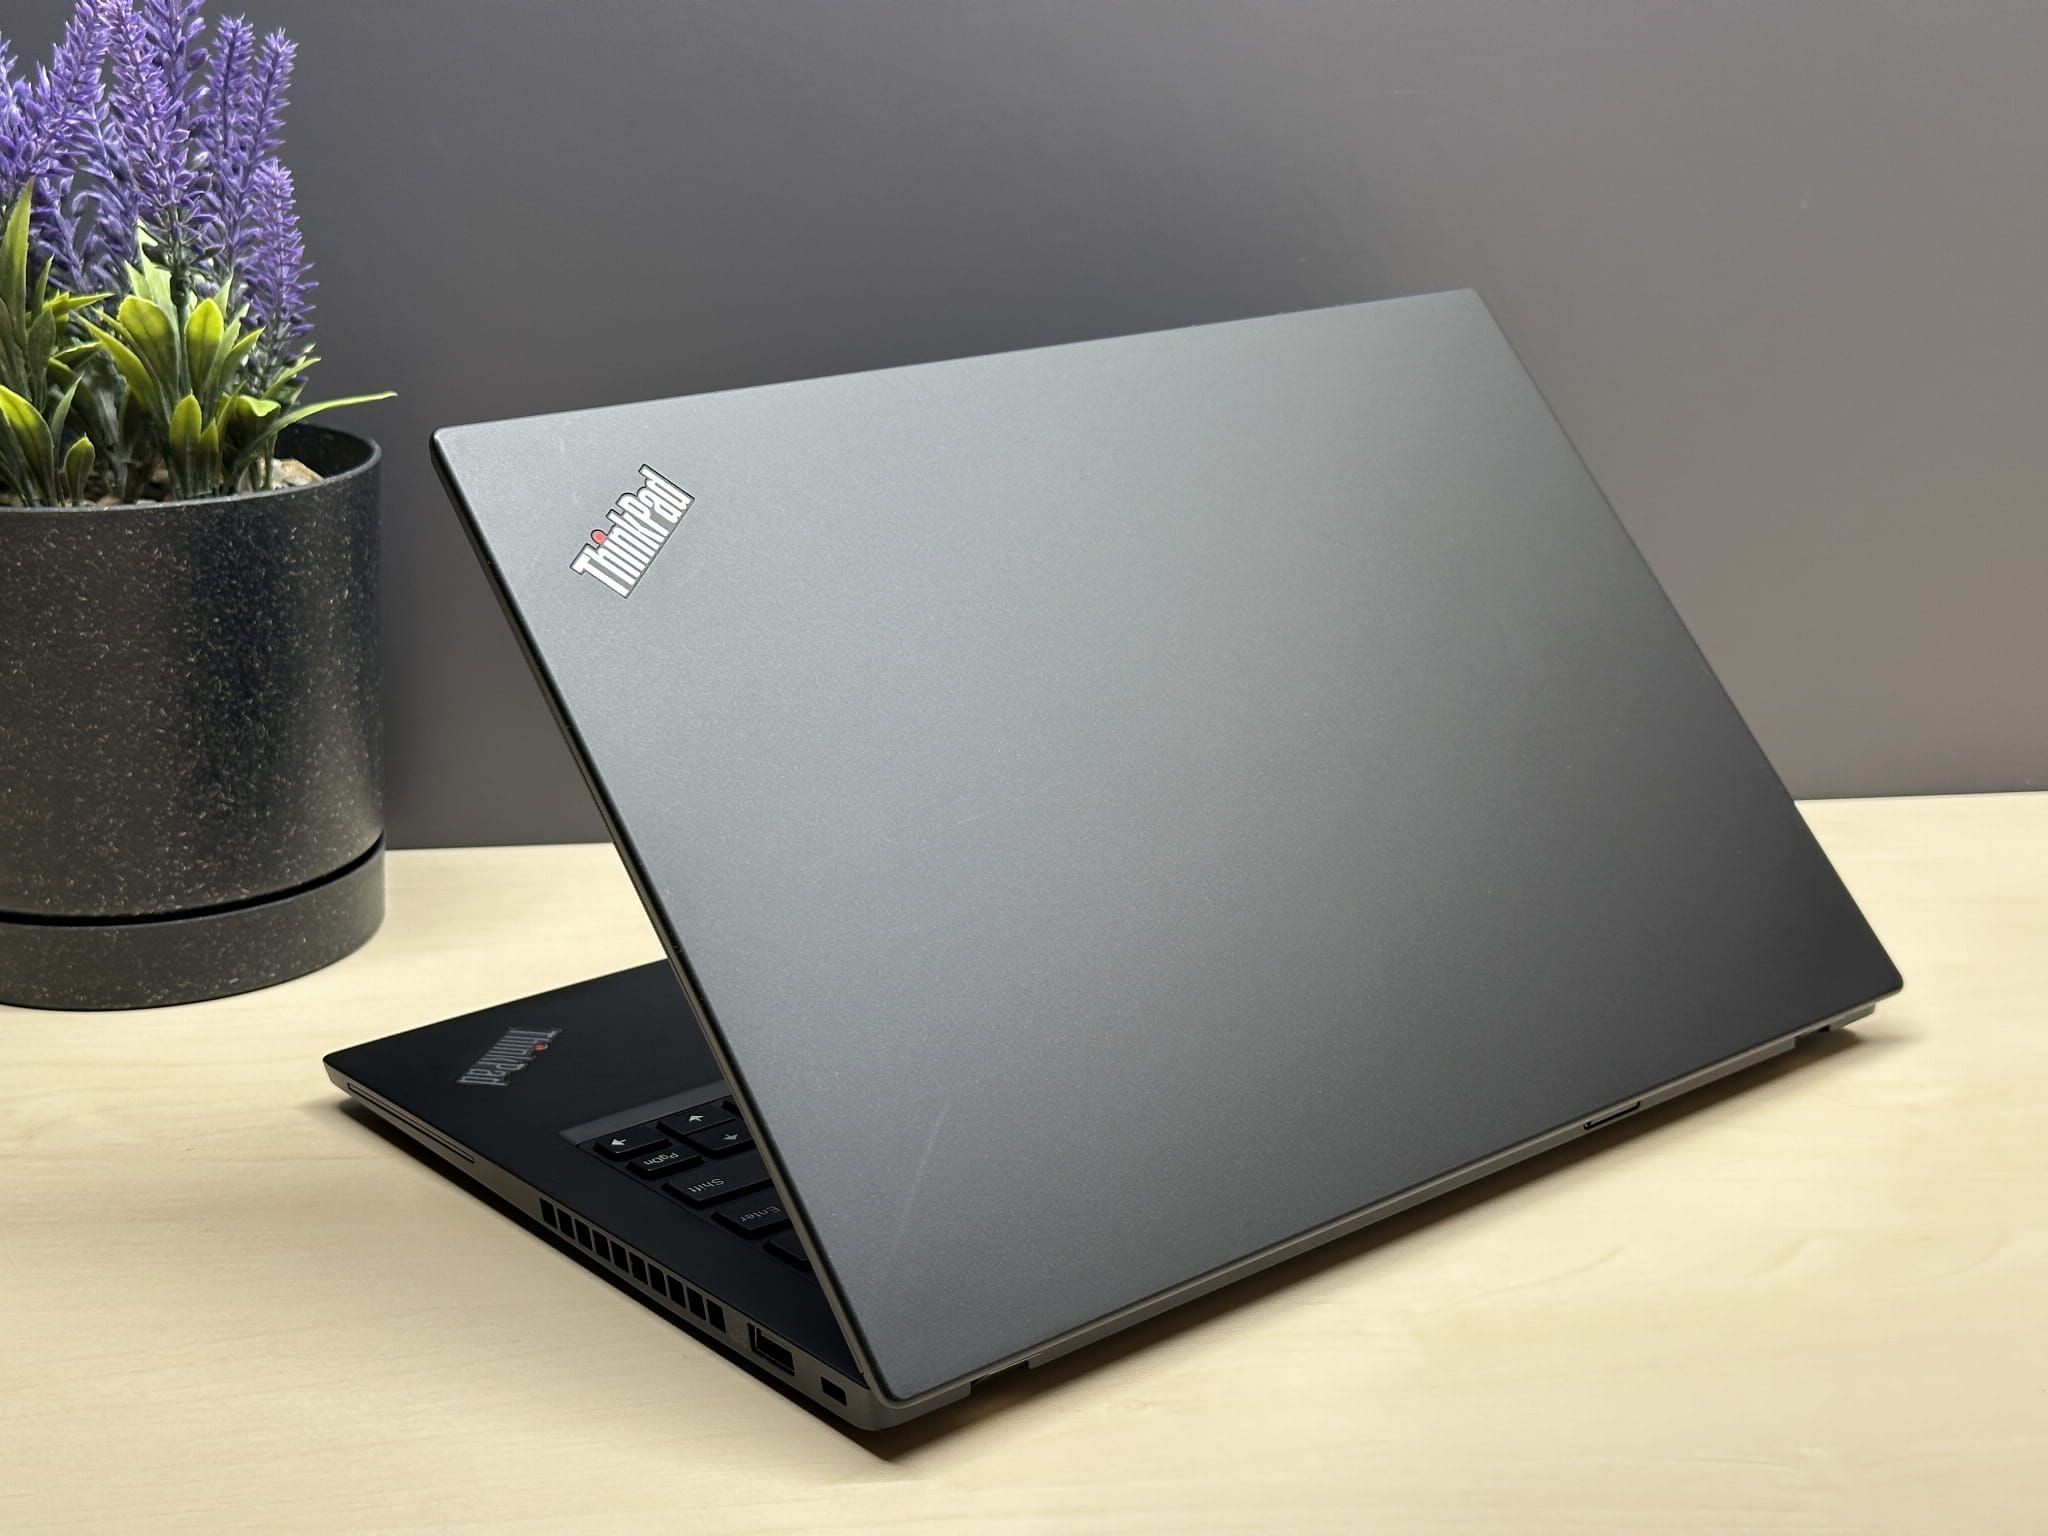 Laptop Lenovo ThinkPad X280 | i5-8250U / 8GB/ 512GB/ FHD / US / OUTLET